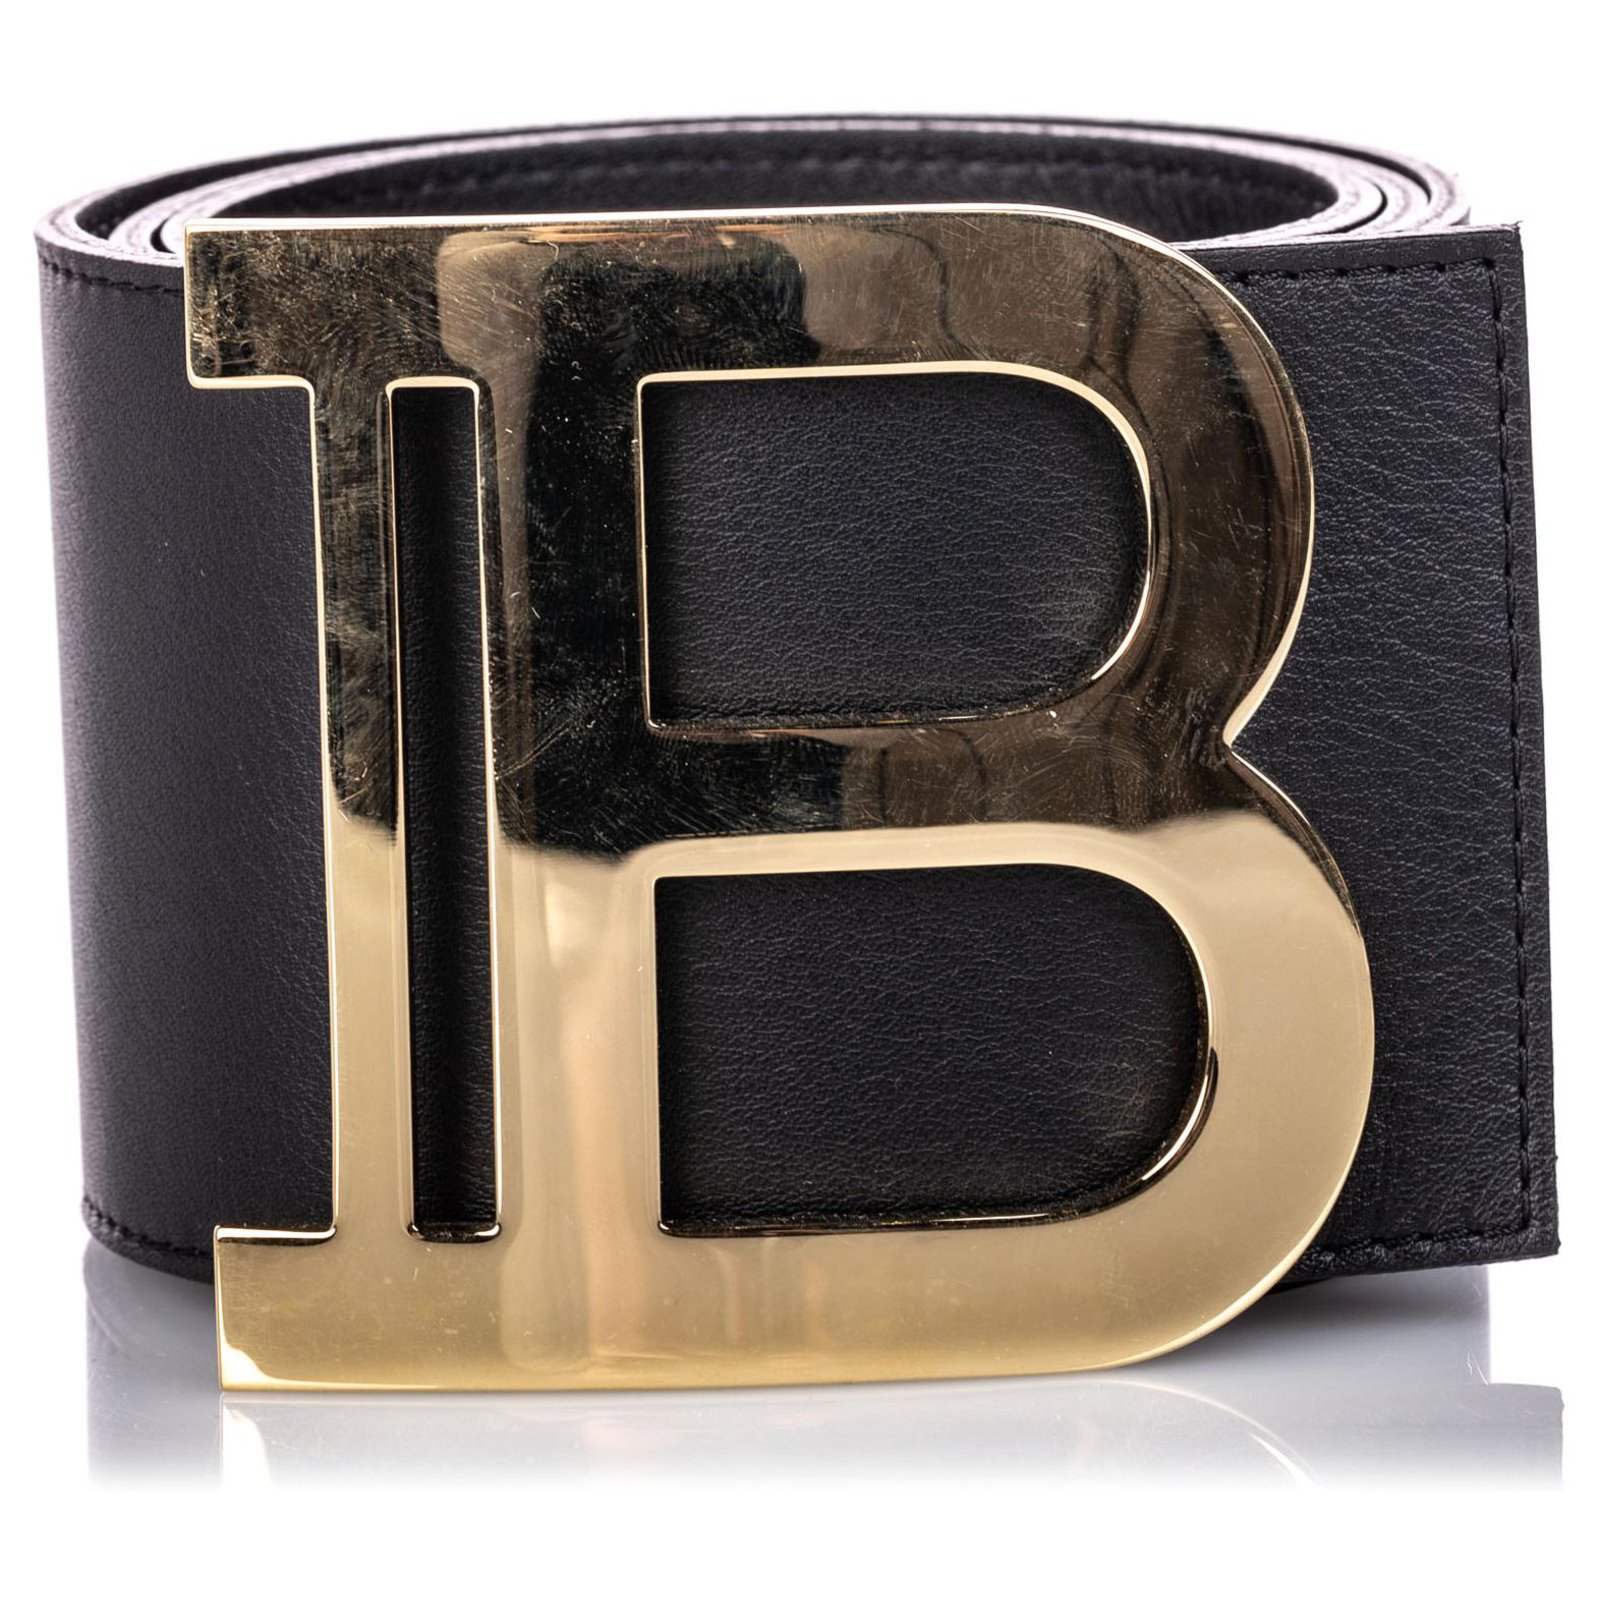 BALMAIN: leather belt with monogram buckle - Black